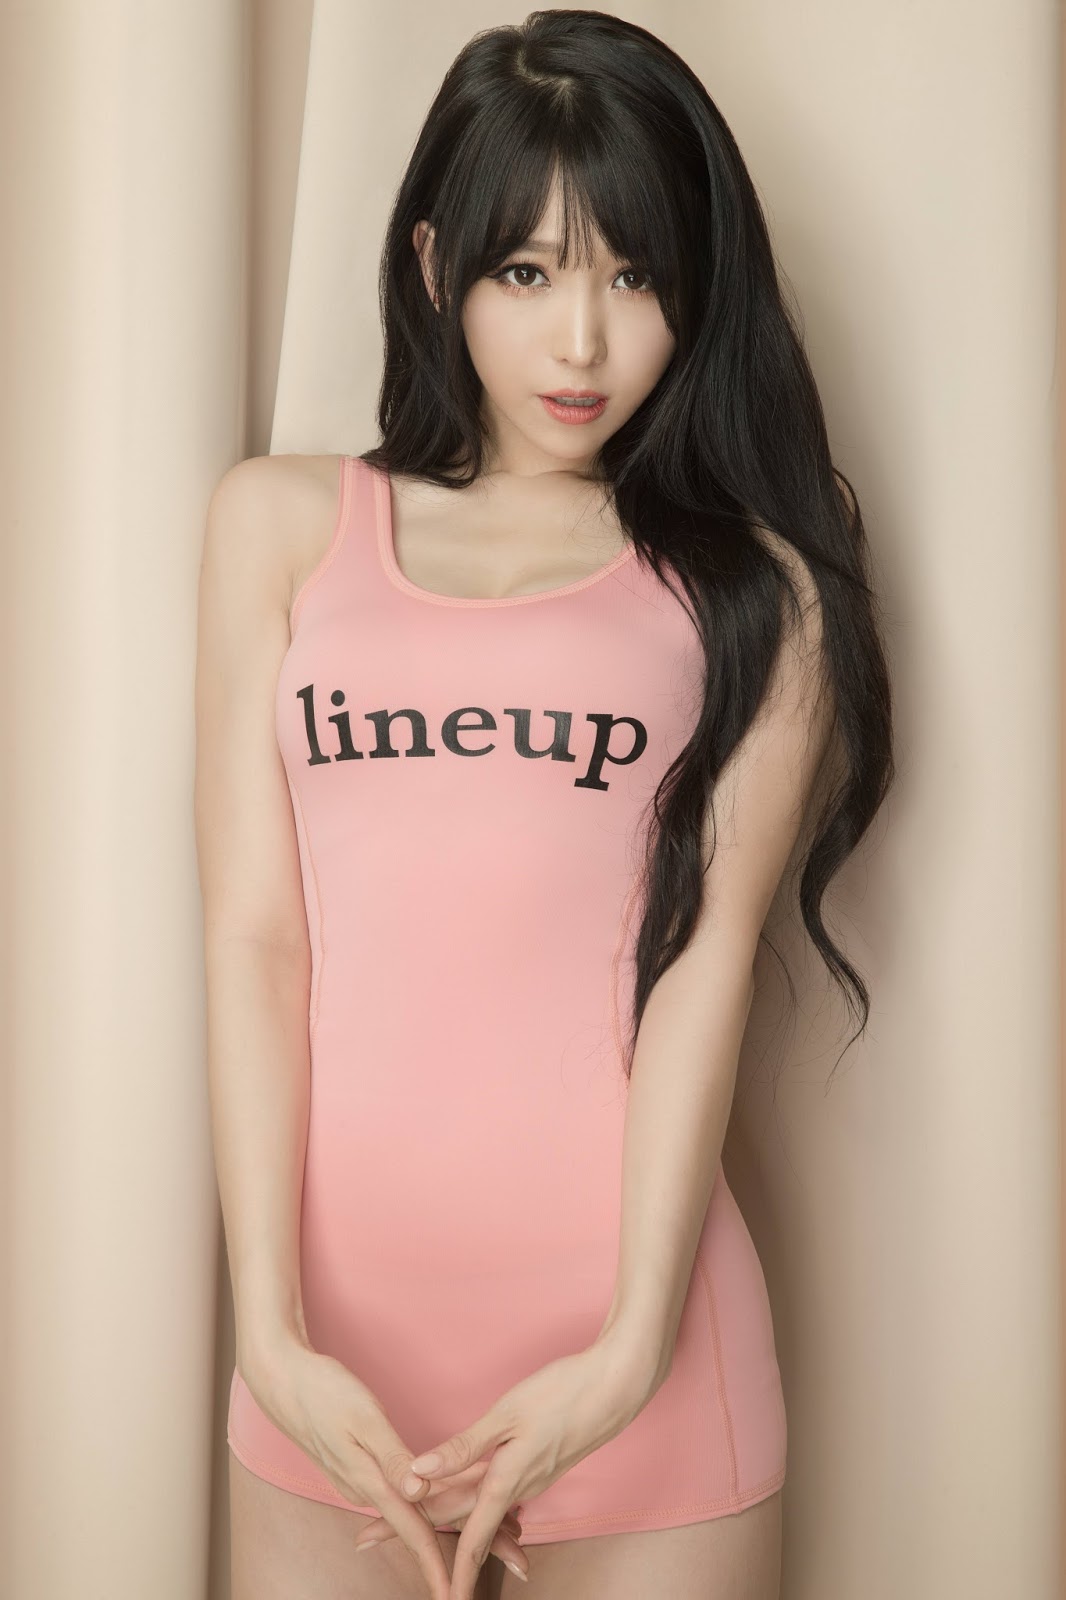 Korean Model Lee Eun Hye in Fashion Photoshoot June 2017 